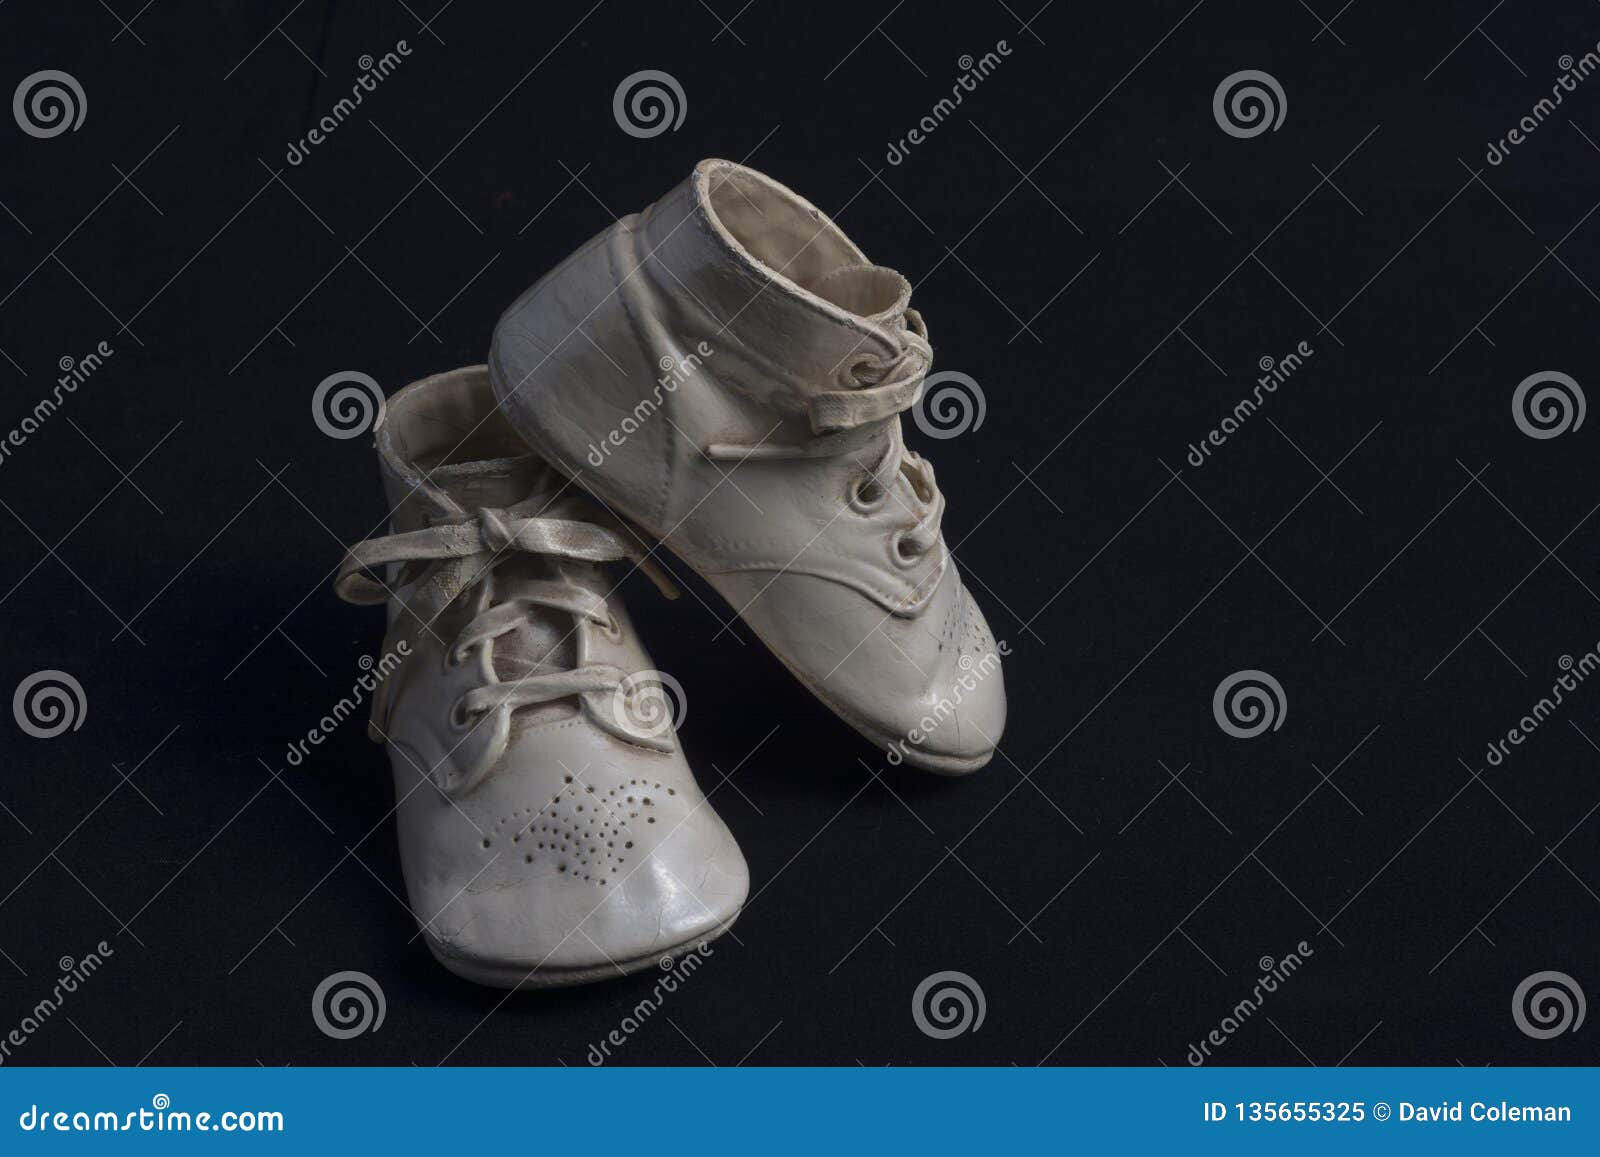 porcelainized baby shoes